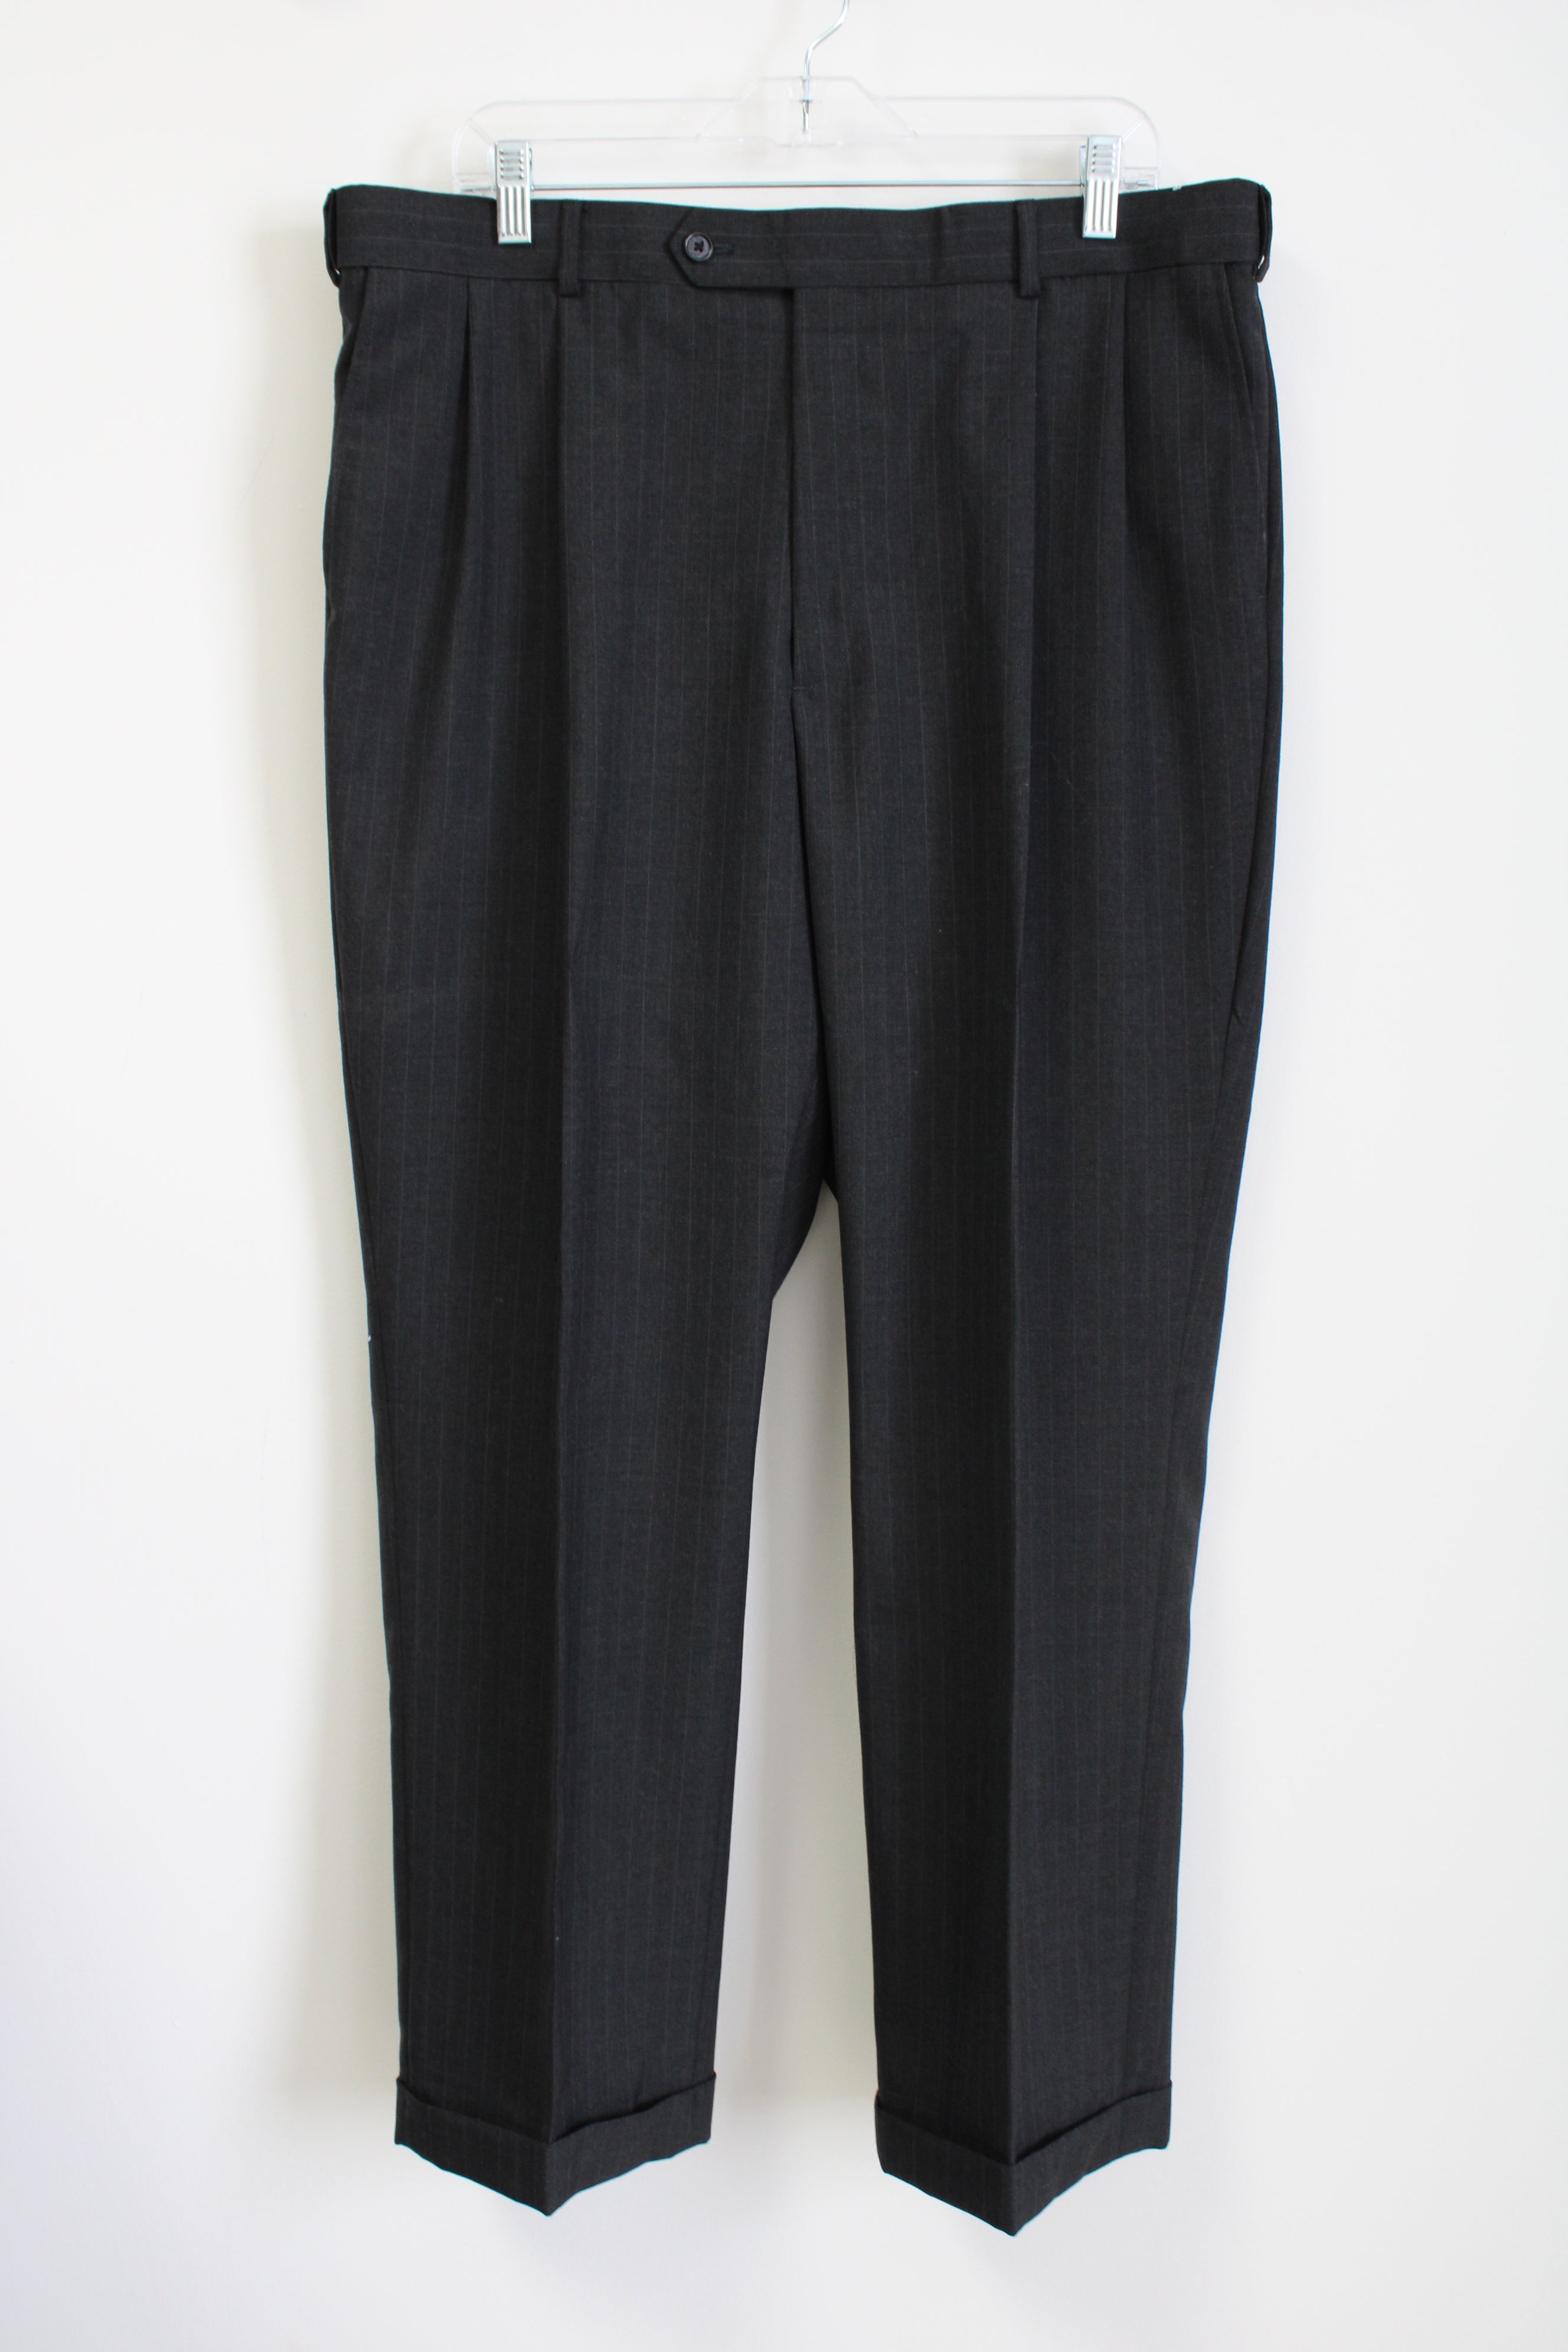 Bert Pulitzer Charcoal Gray Striped Work Pants | 36X32